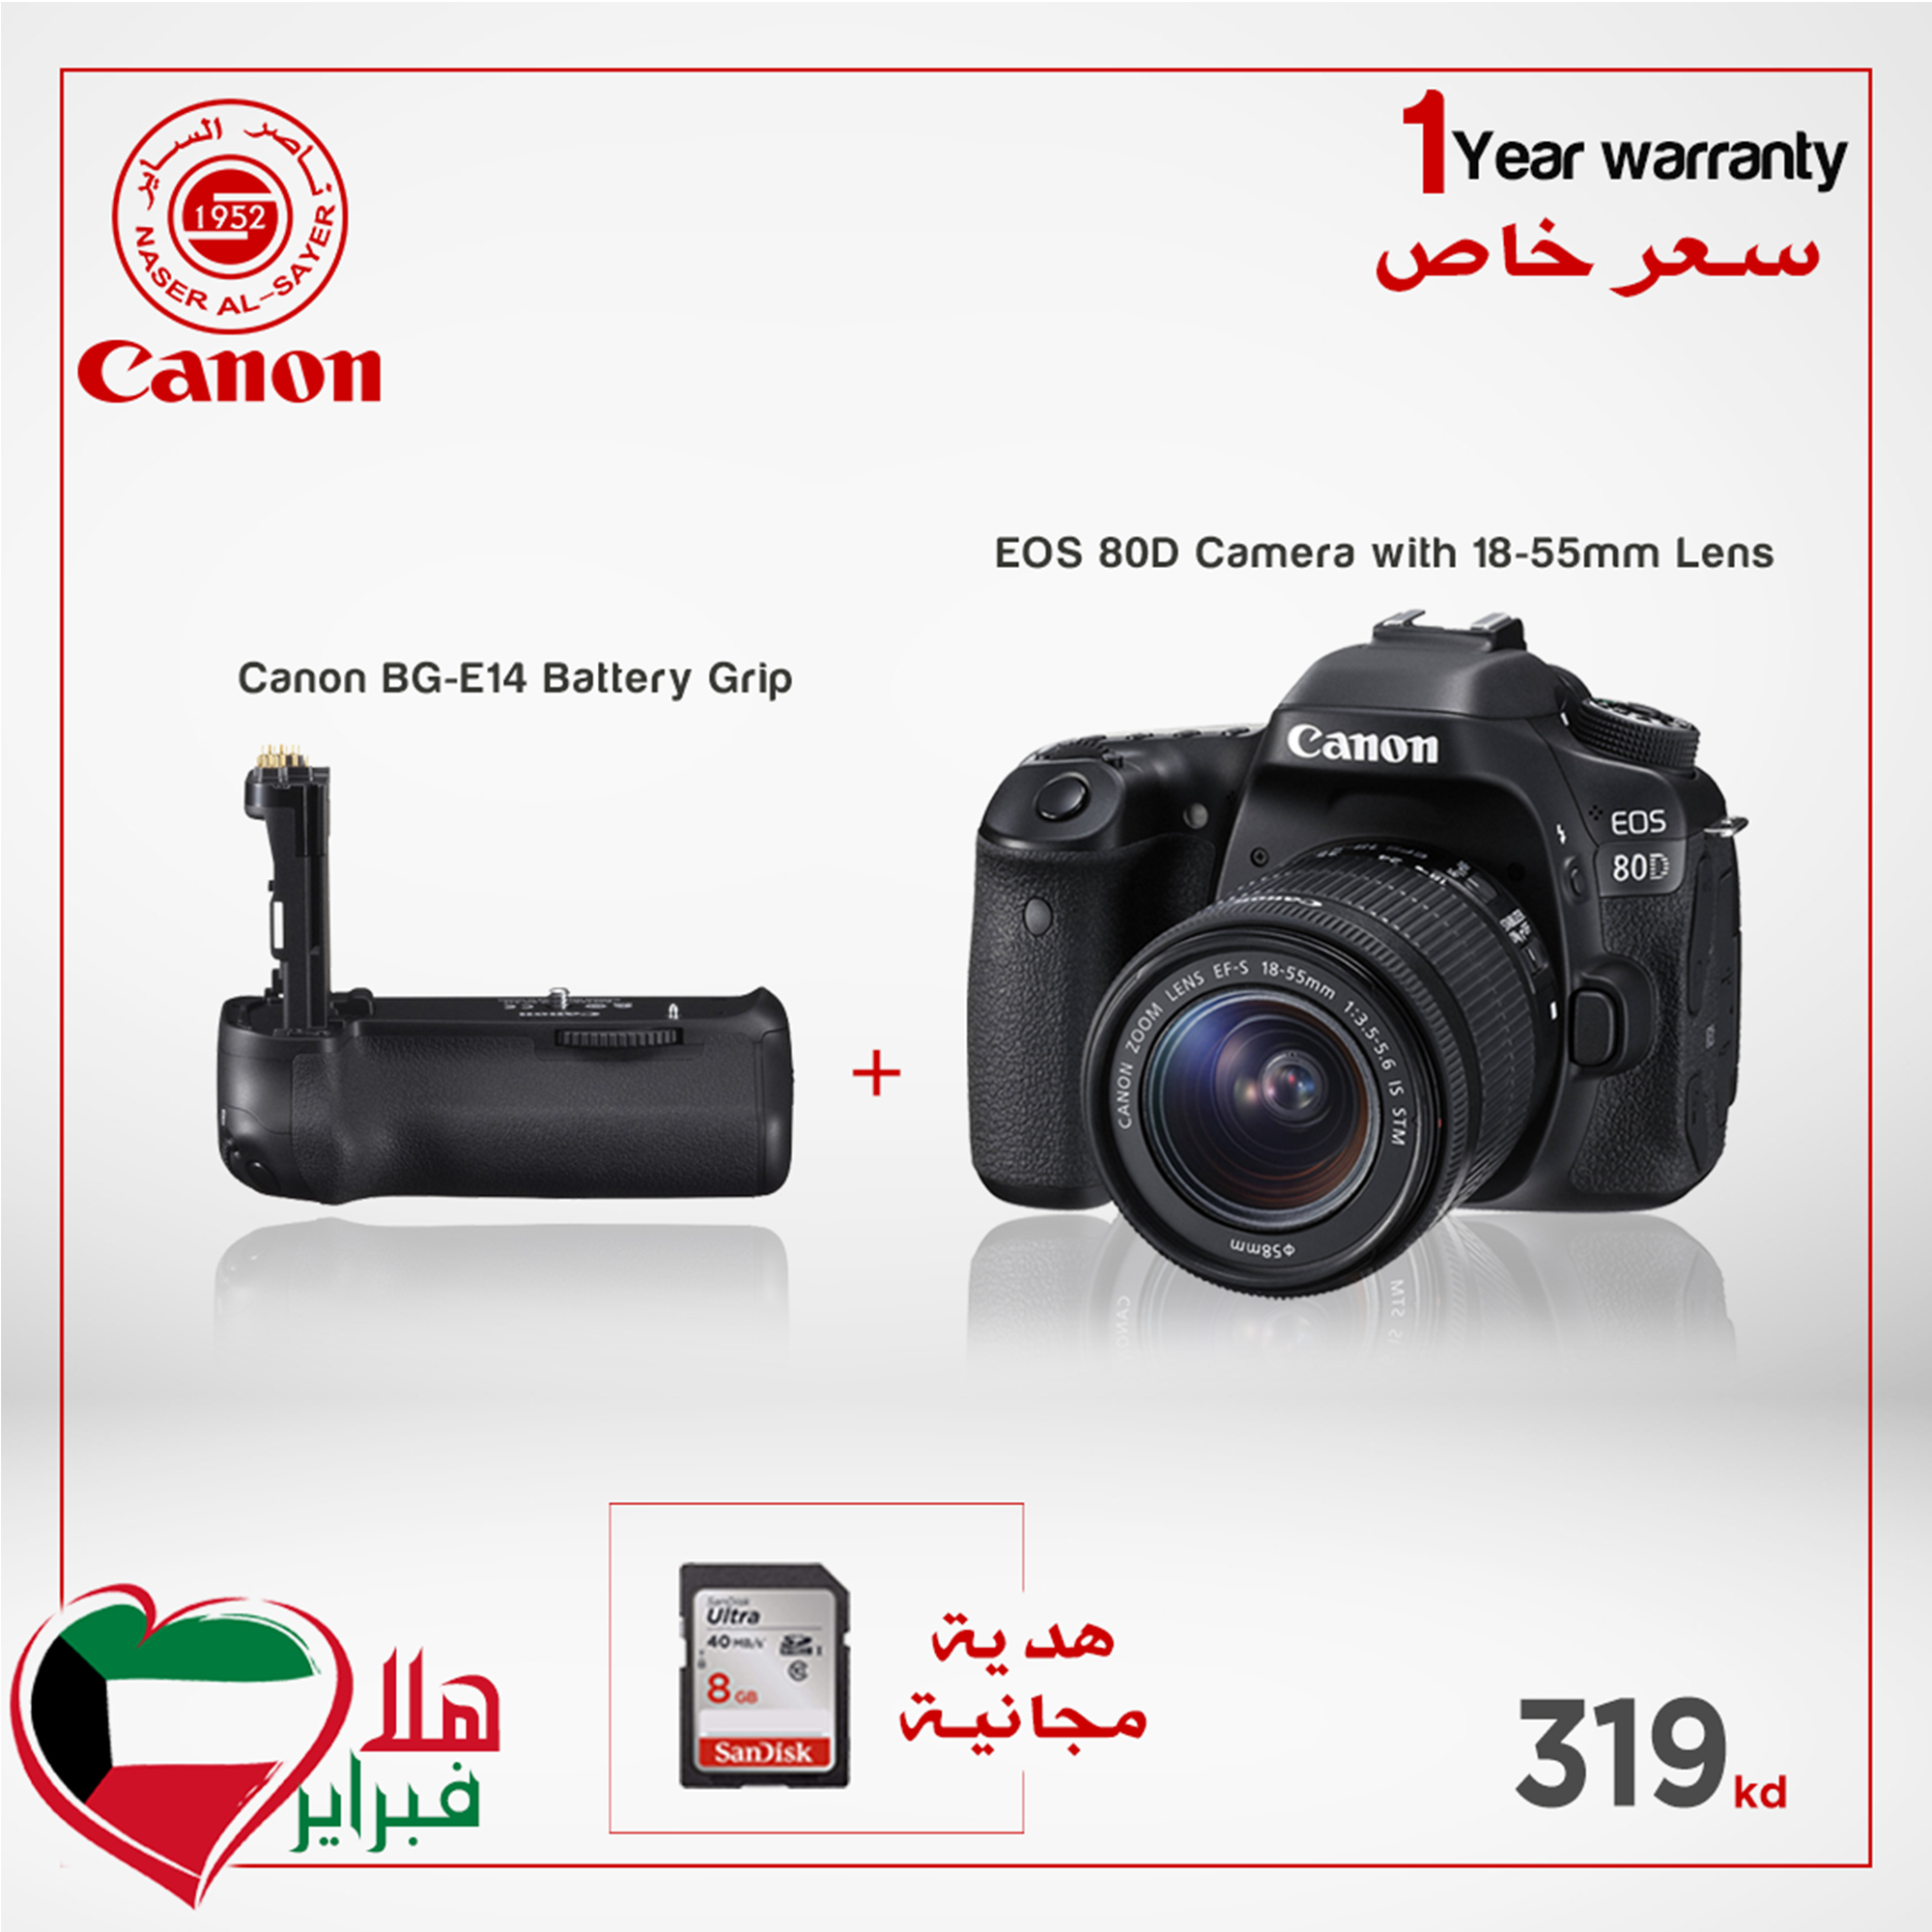 EOS 80D Camera with 18-55mm Lens + Canon BG-E14 Battery Grip